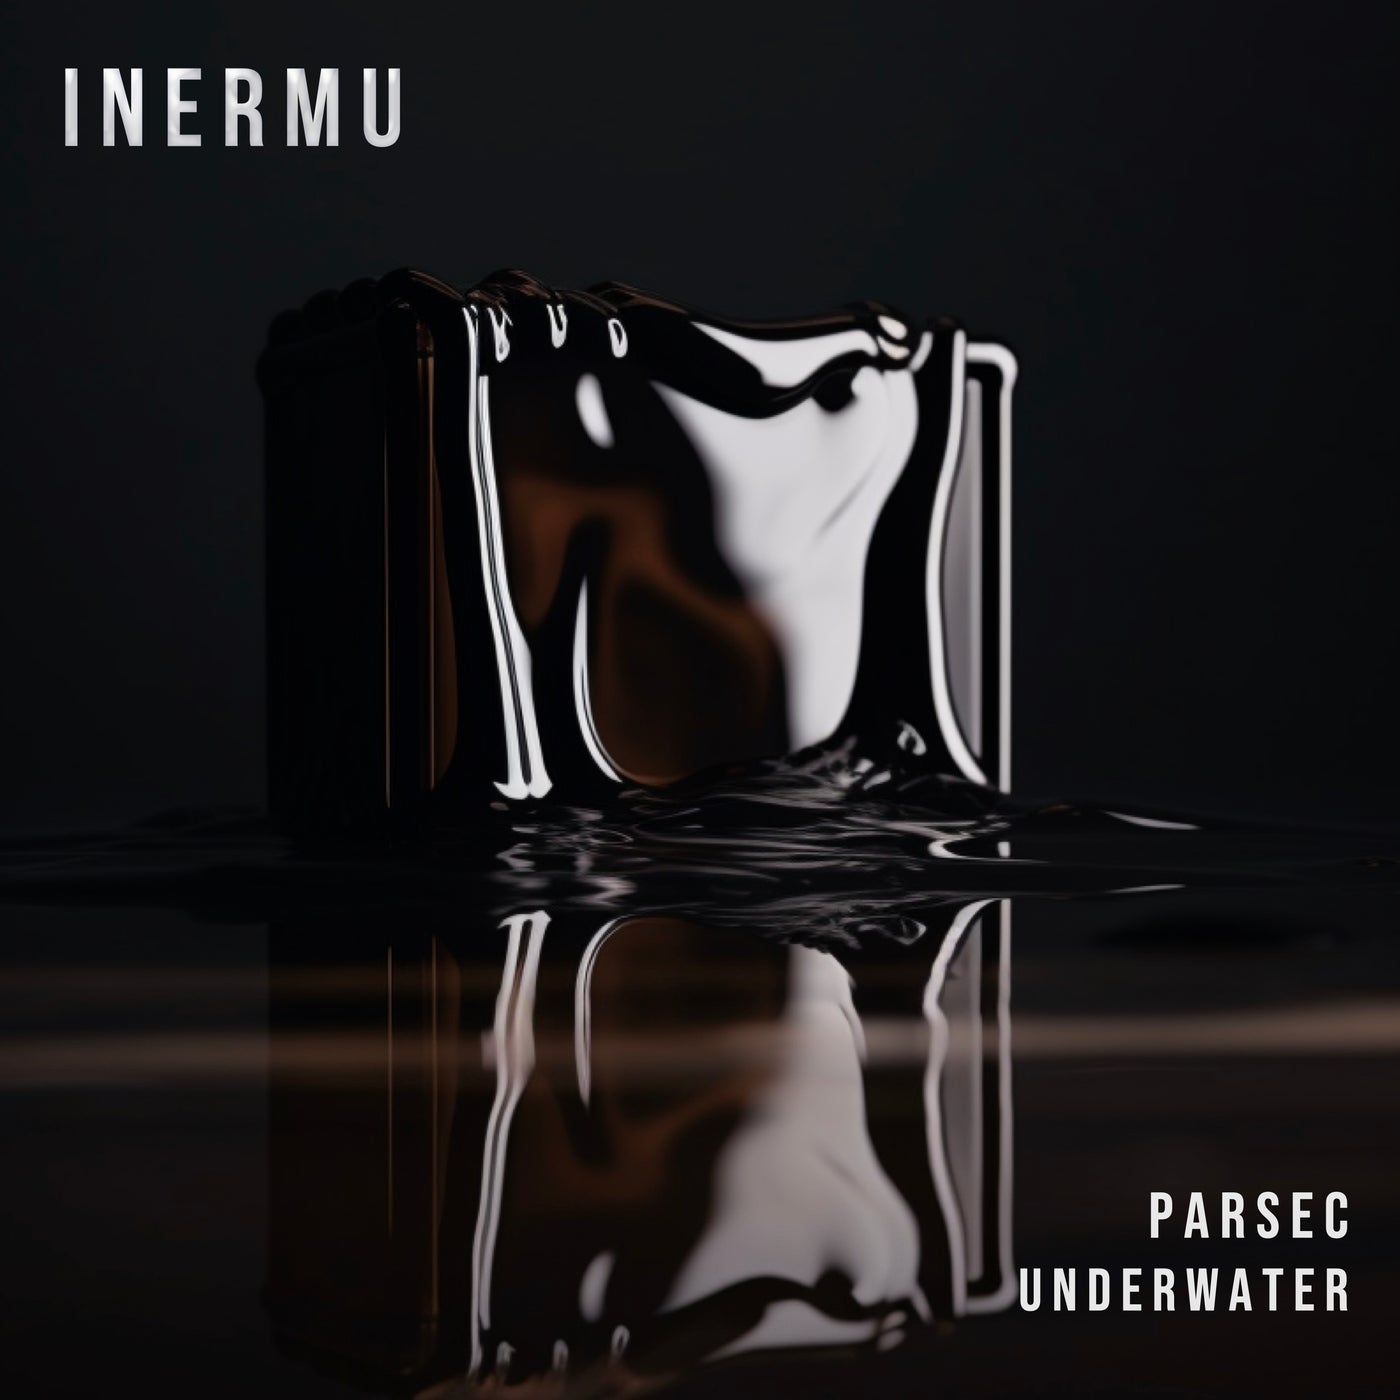 image cover: Parsec (UK) - Underwater on Inermu